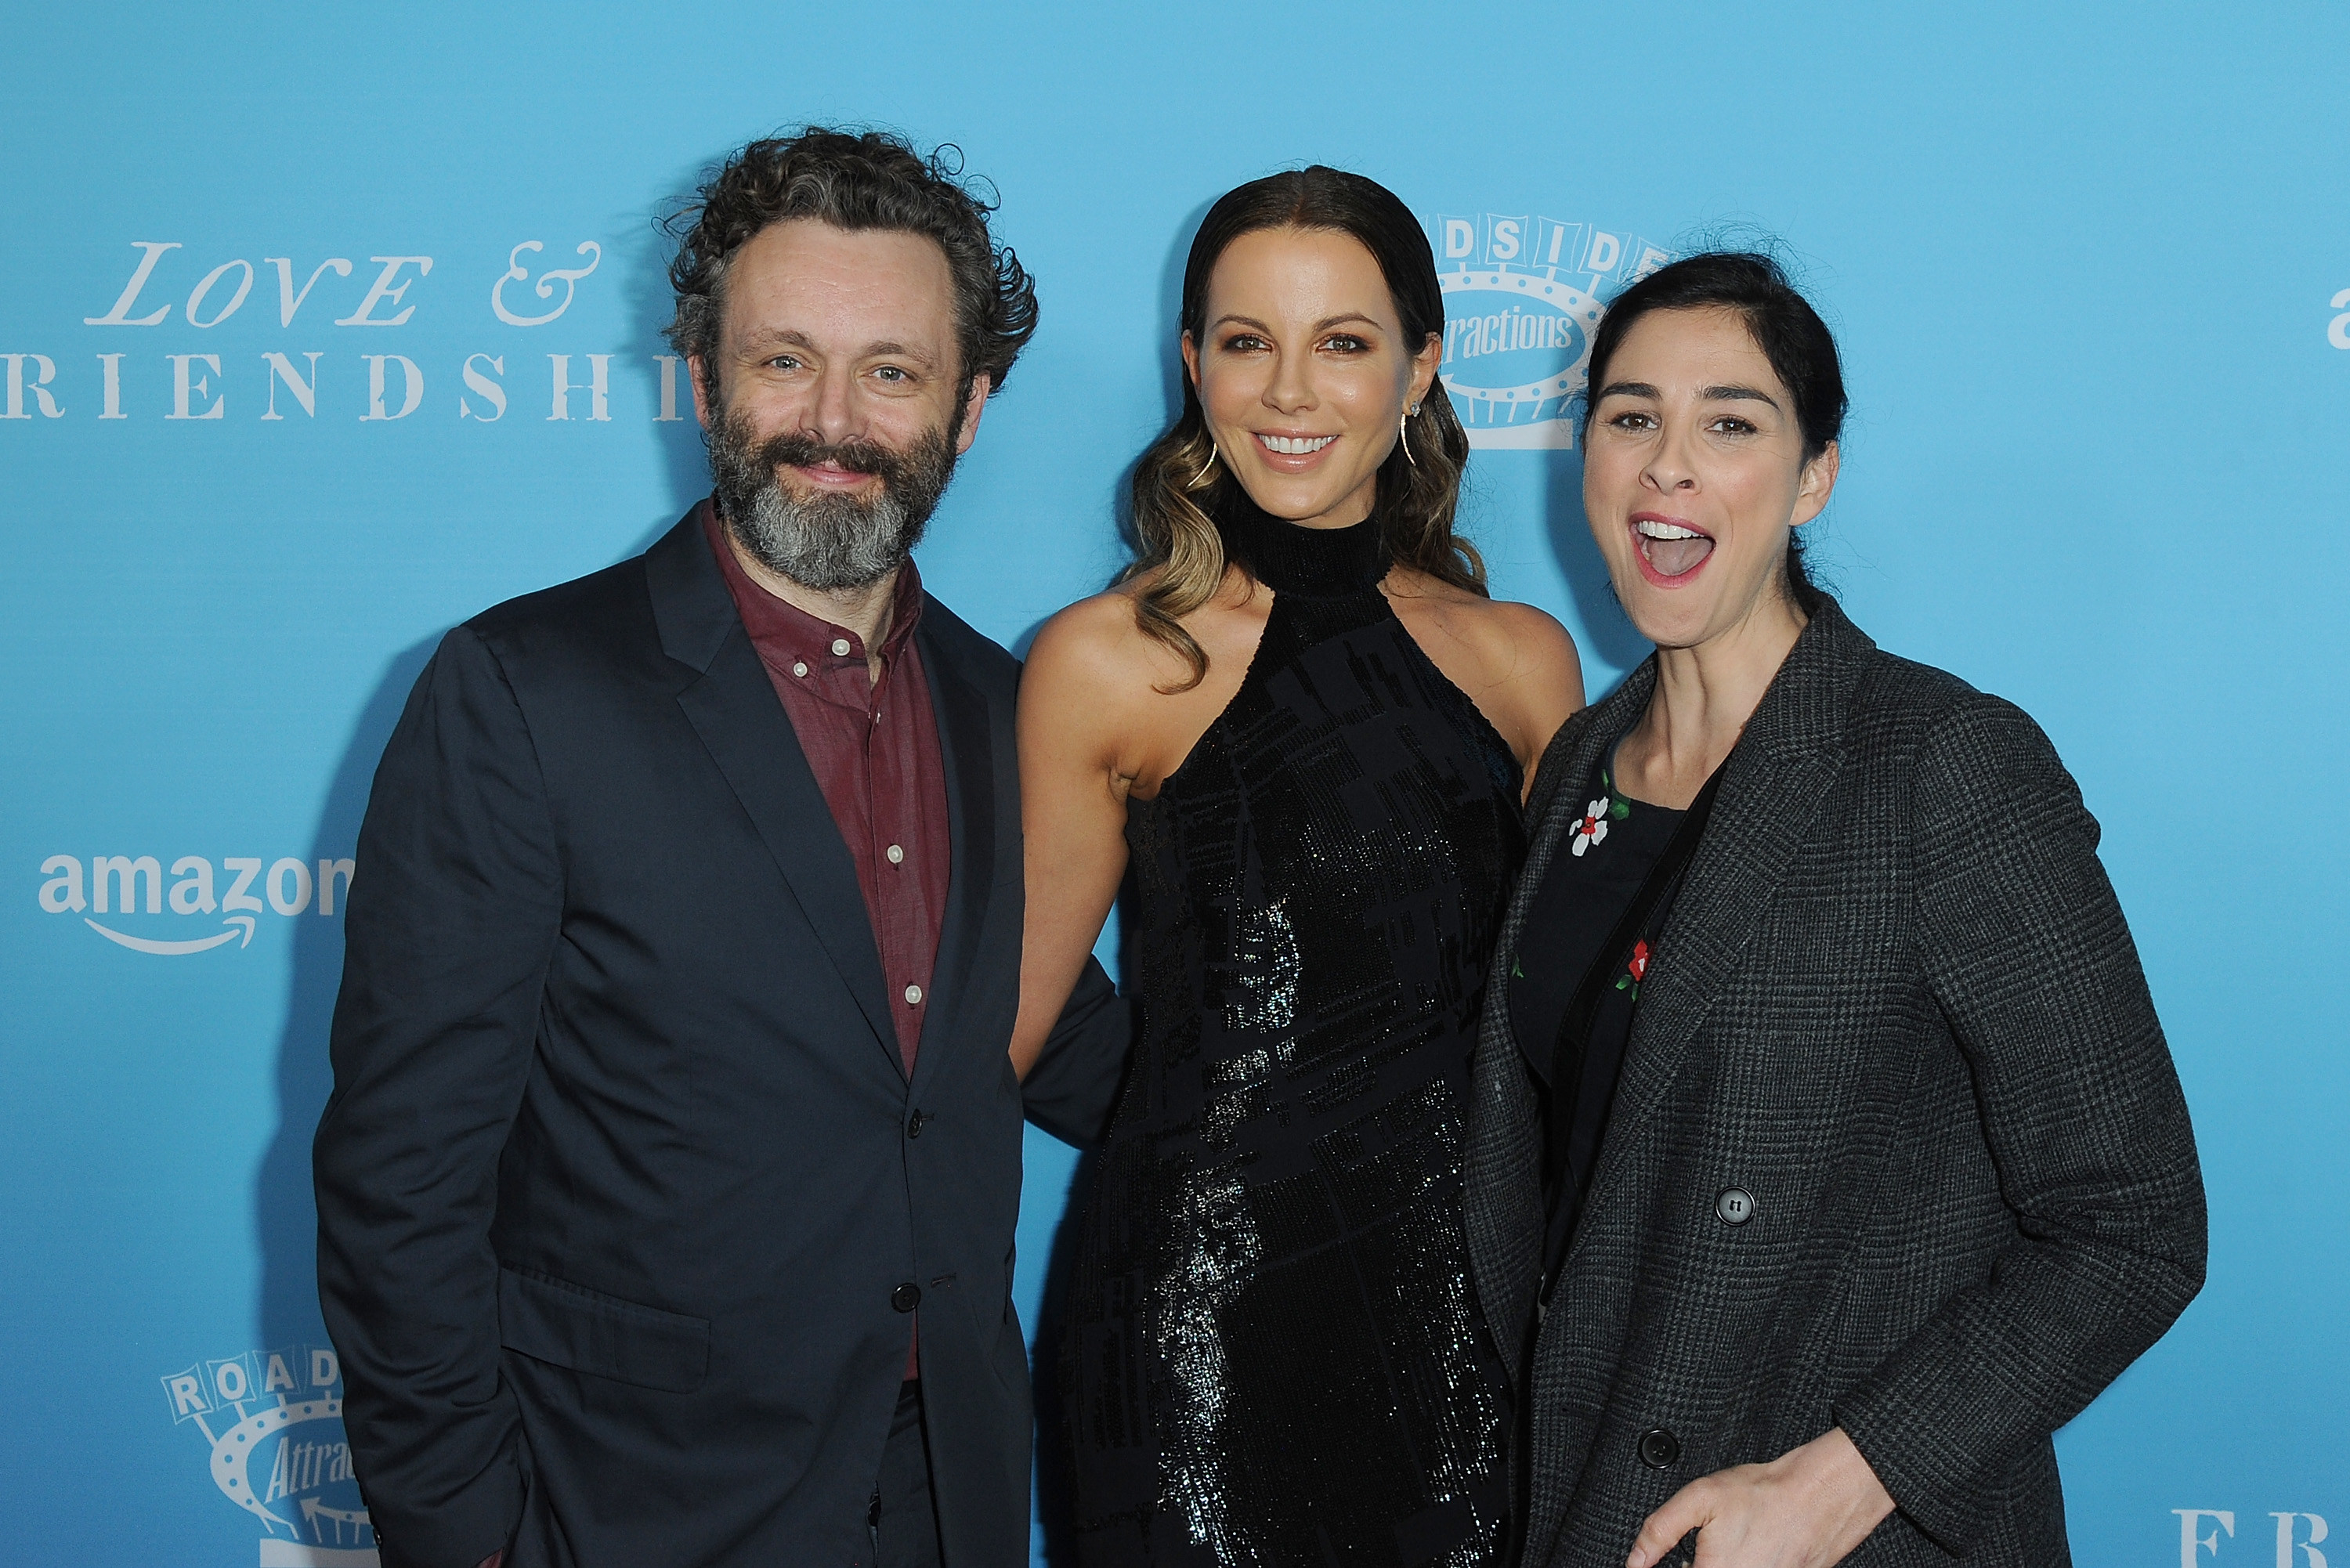 Michael Sheen, Kate Beckinsale, and Sarah Silverman posing together